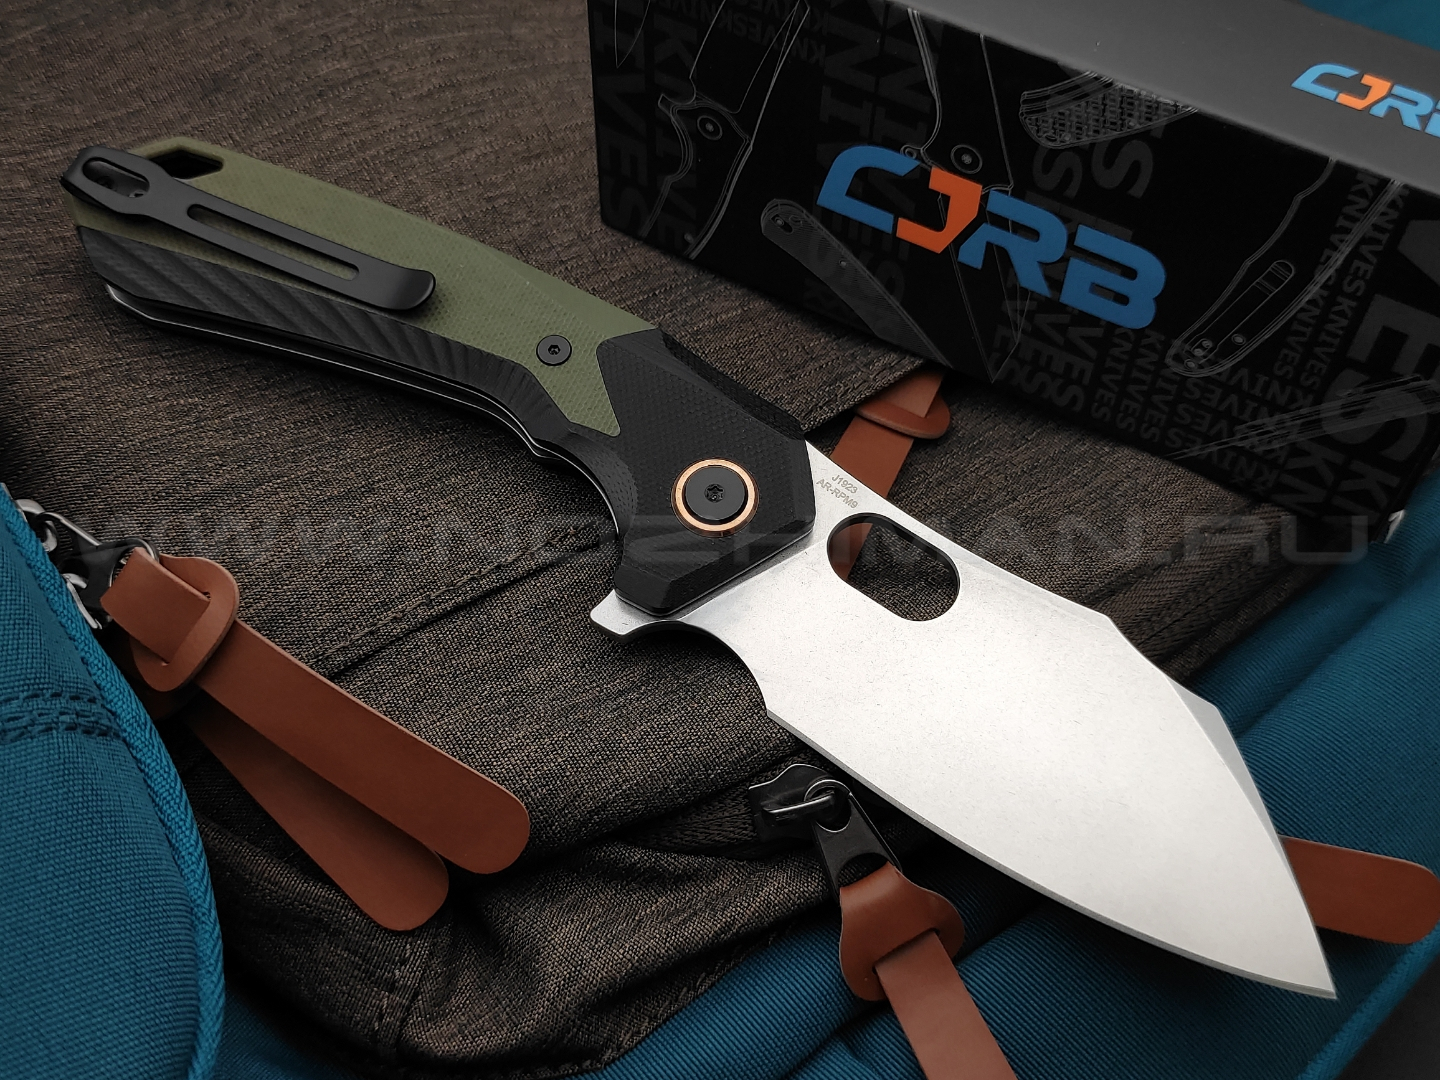 Нож CJRB Caldera J1923-GN сталь AR-RPM9, рукоять G10 black & green